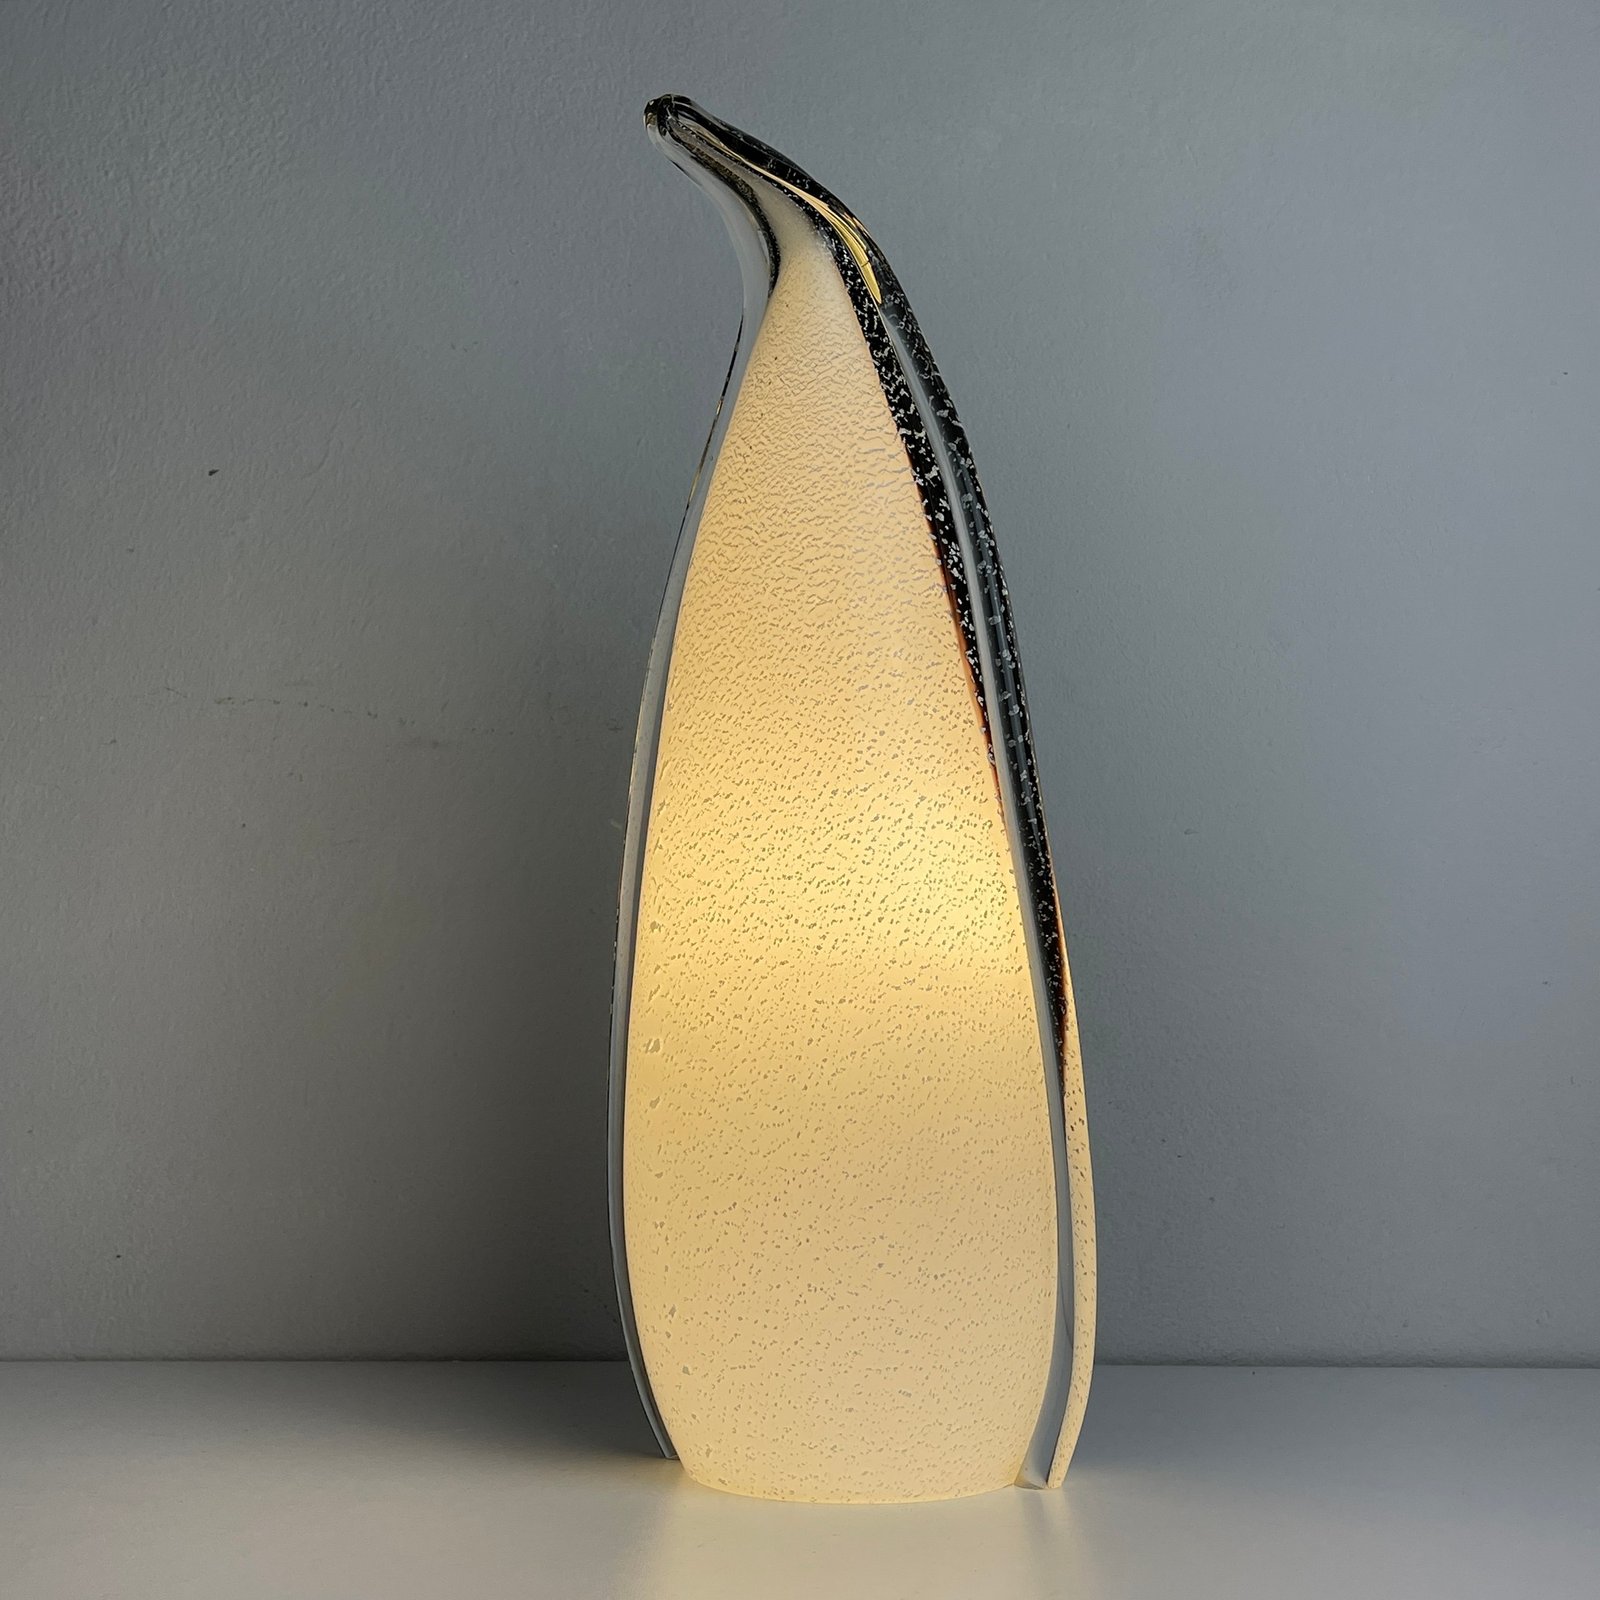 Large murano table lamp Penguin Italy 1980s Mid-century italian lighting